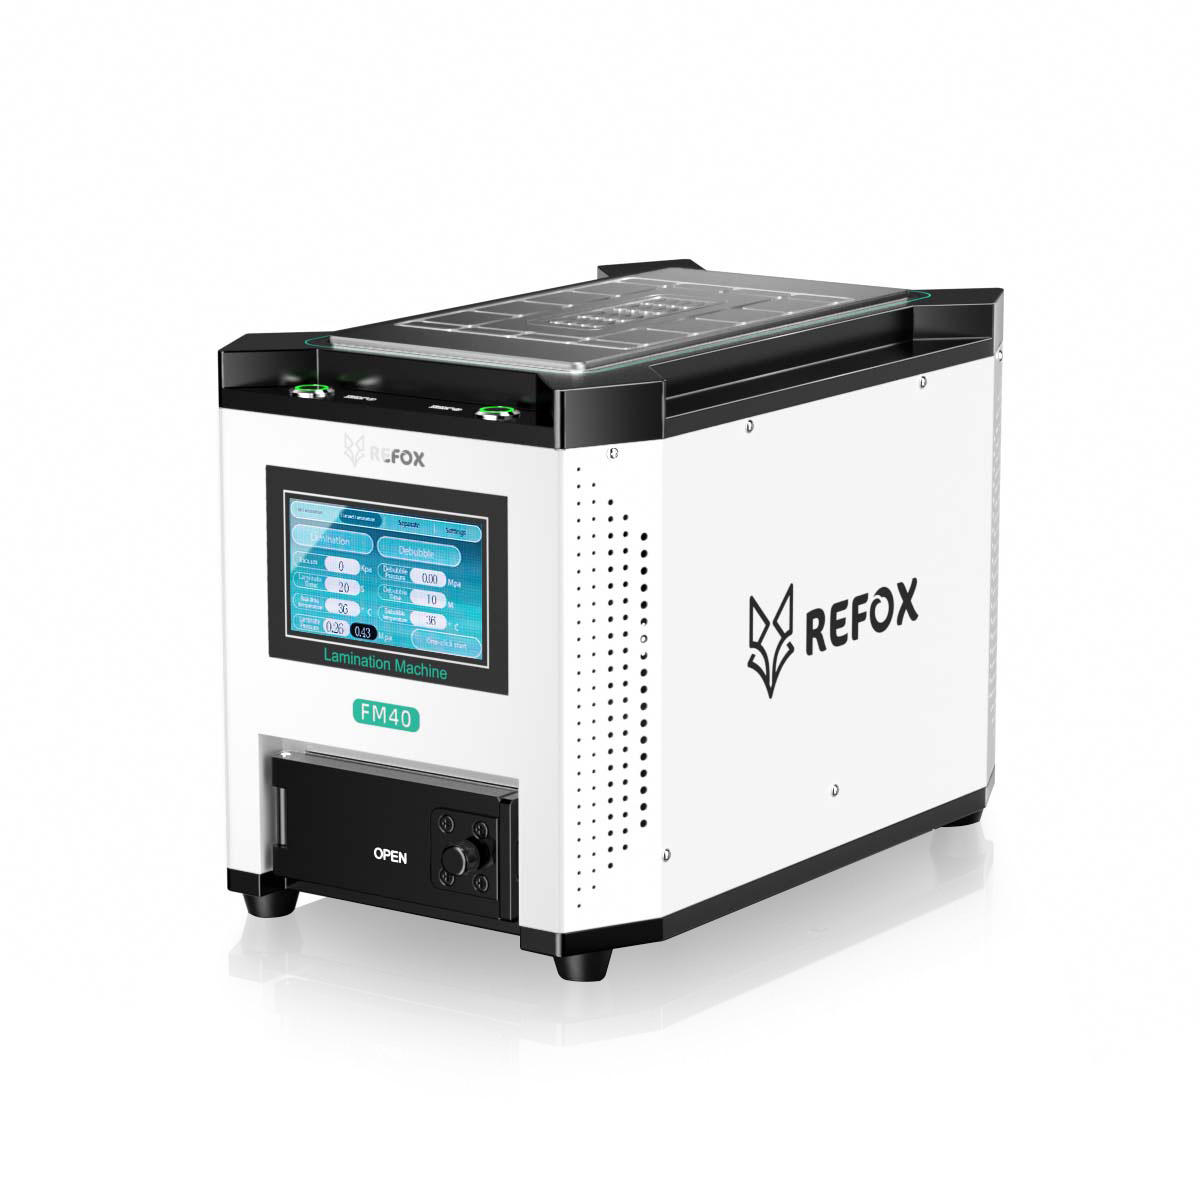 REFOX FM40 Desktop Multi-function Laminating Machine